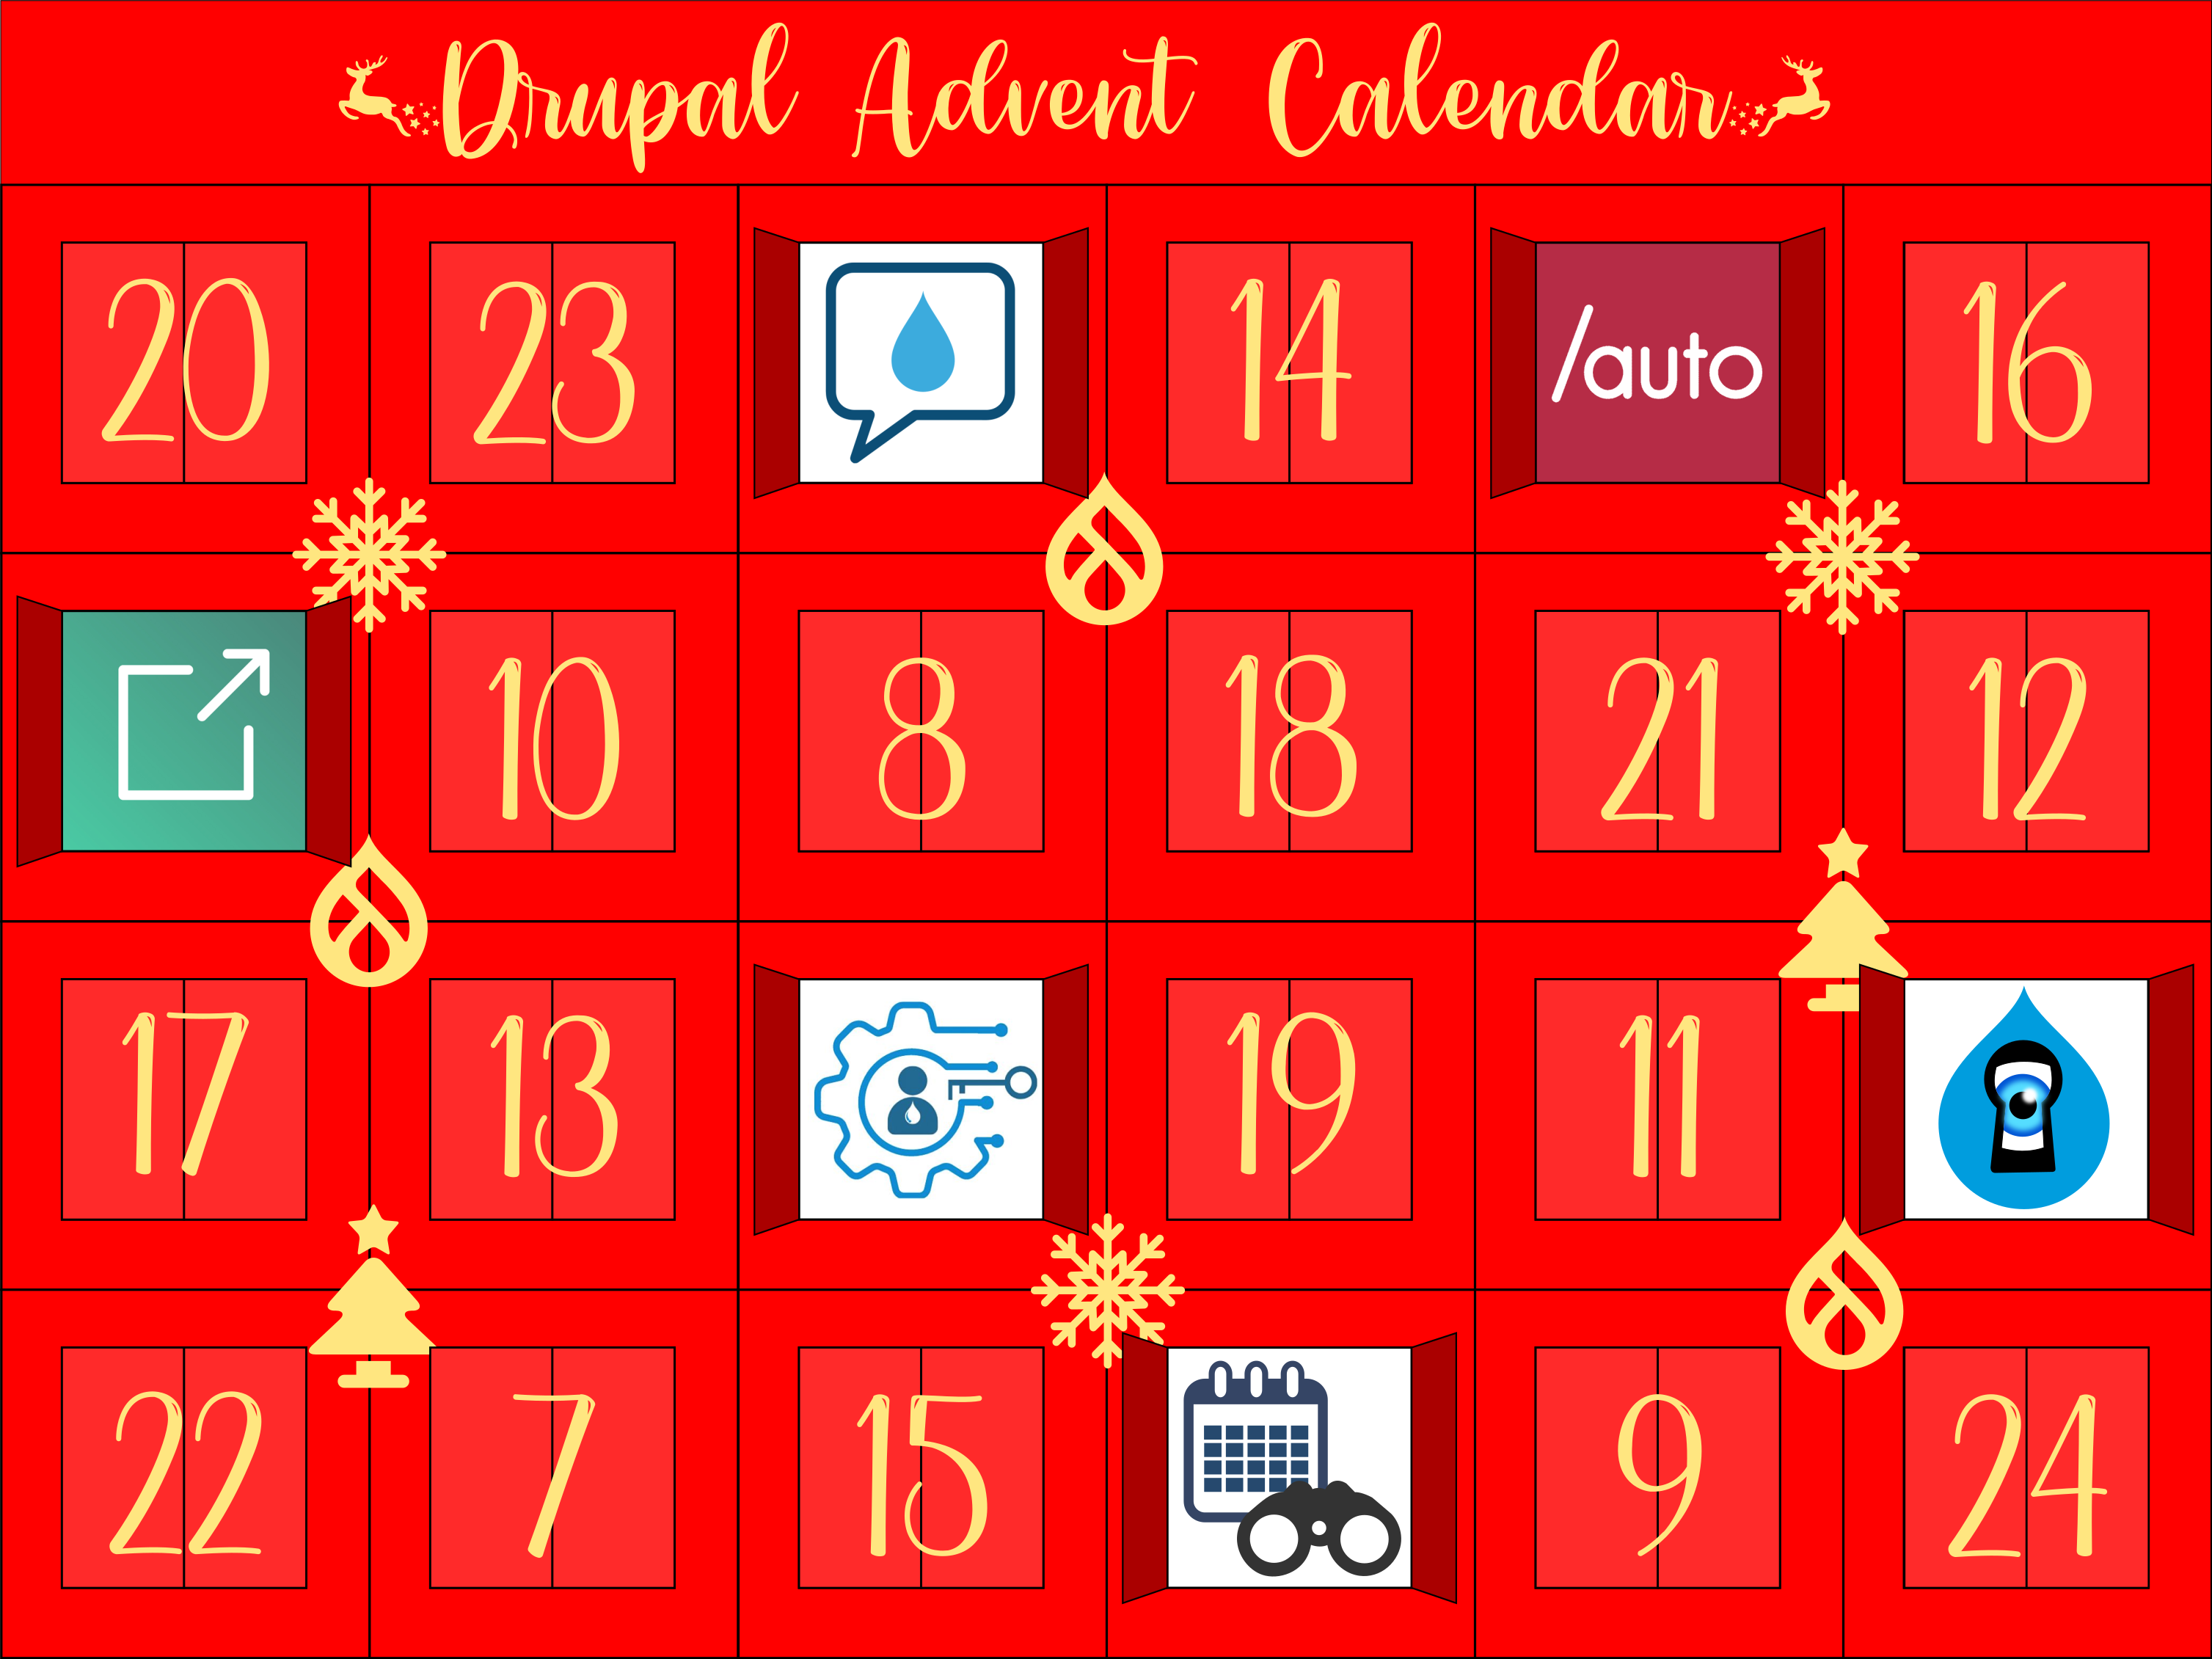 Drupal Advent Calendar with door 6 open, revealing the Access Unpublished module